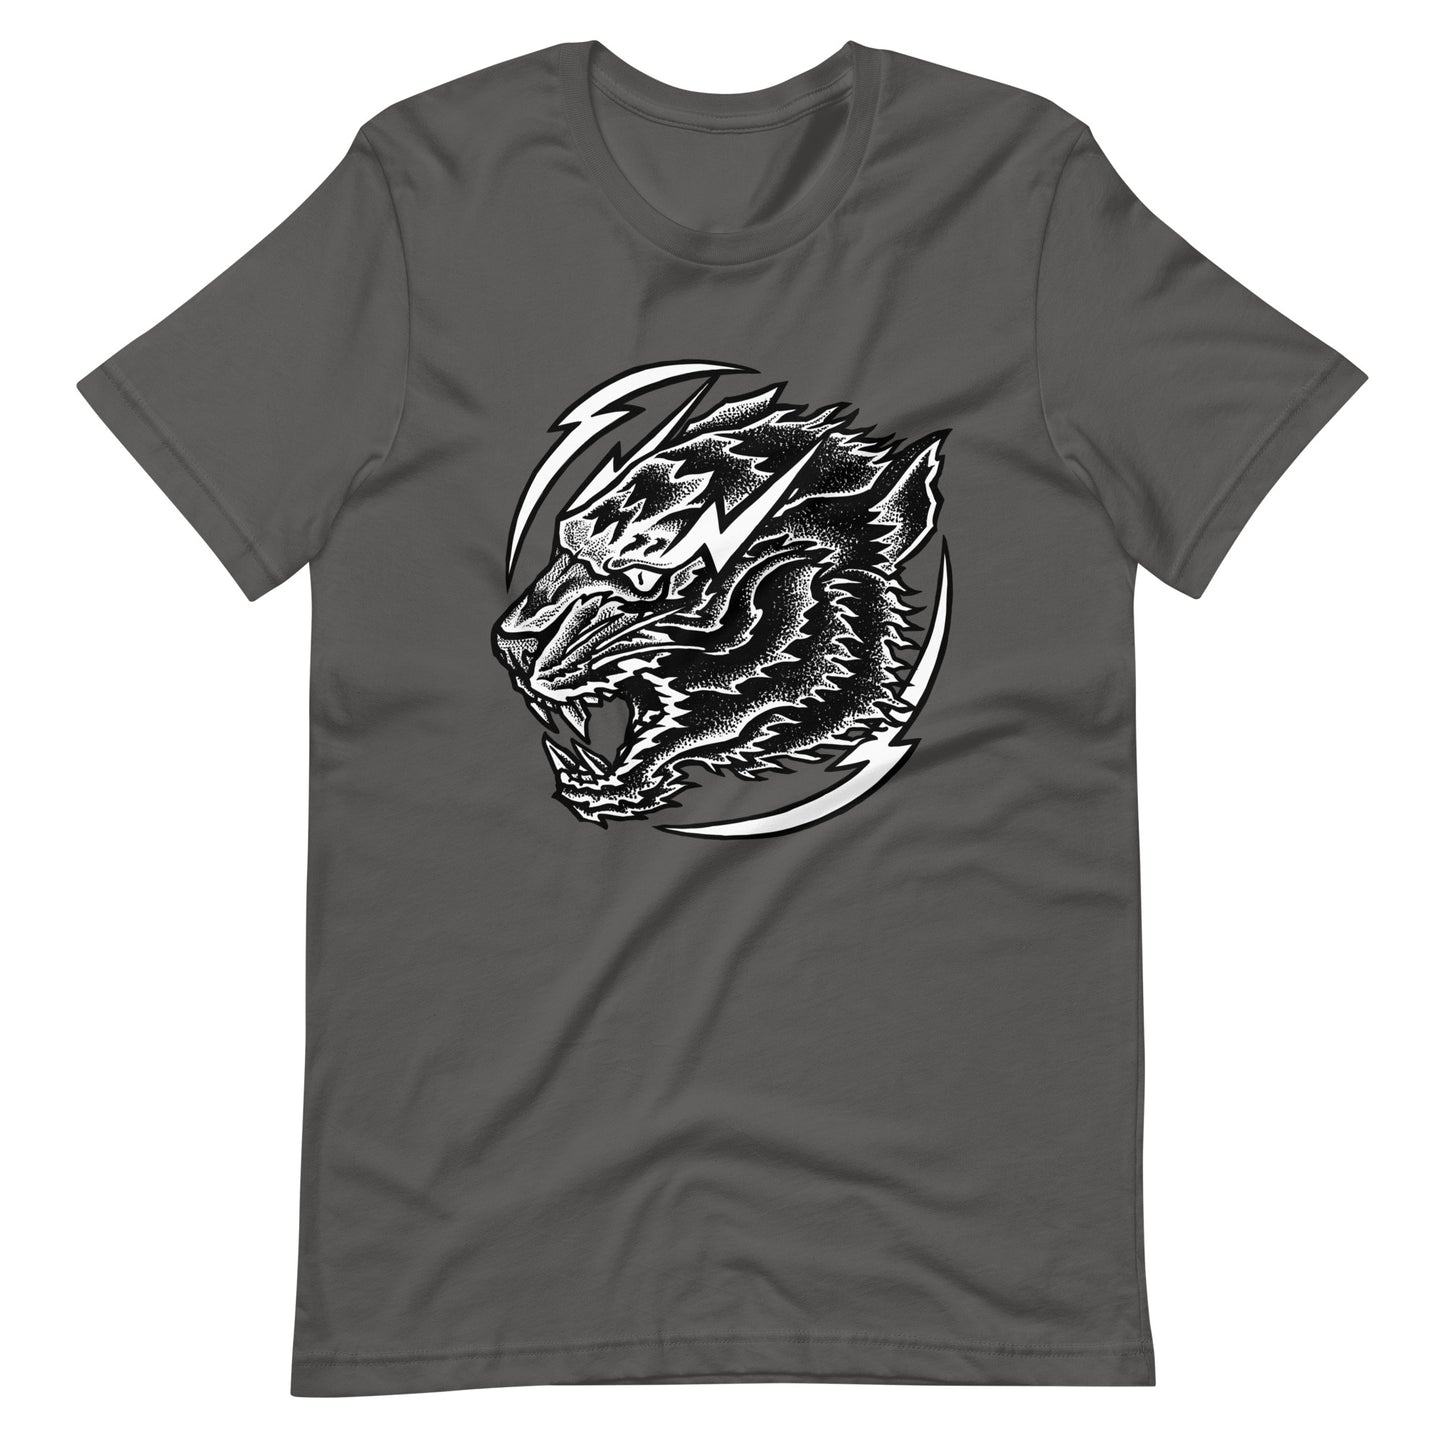 Thunder Tiger - Men's t-shirt - Asphalt Front